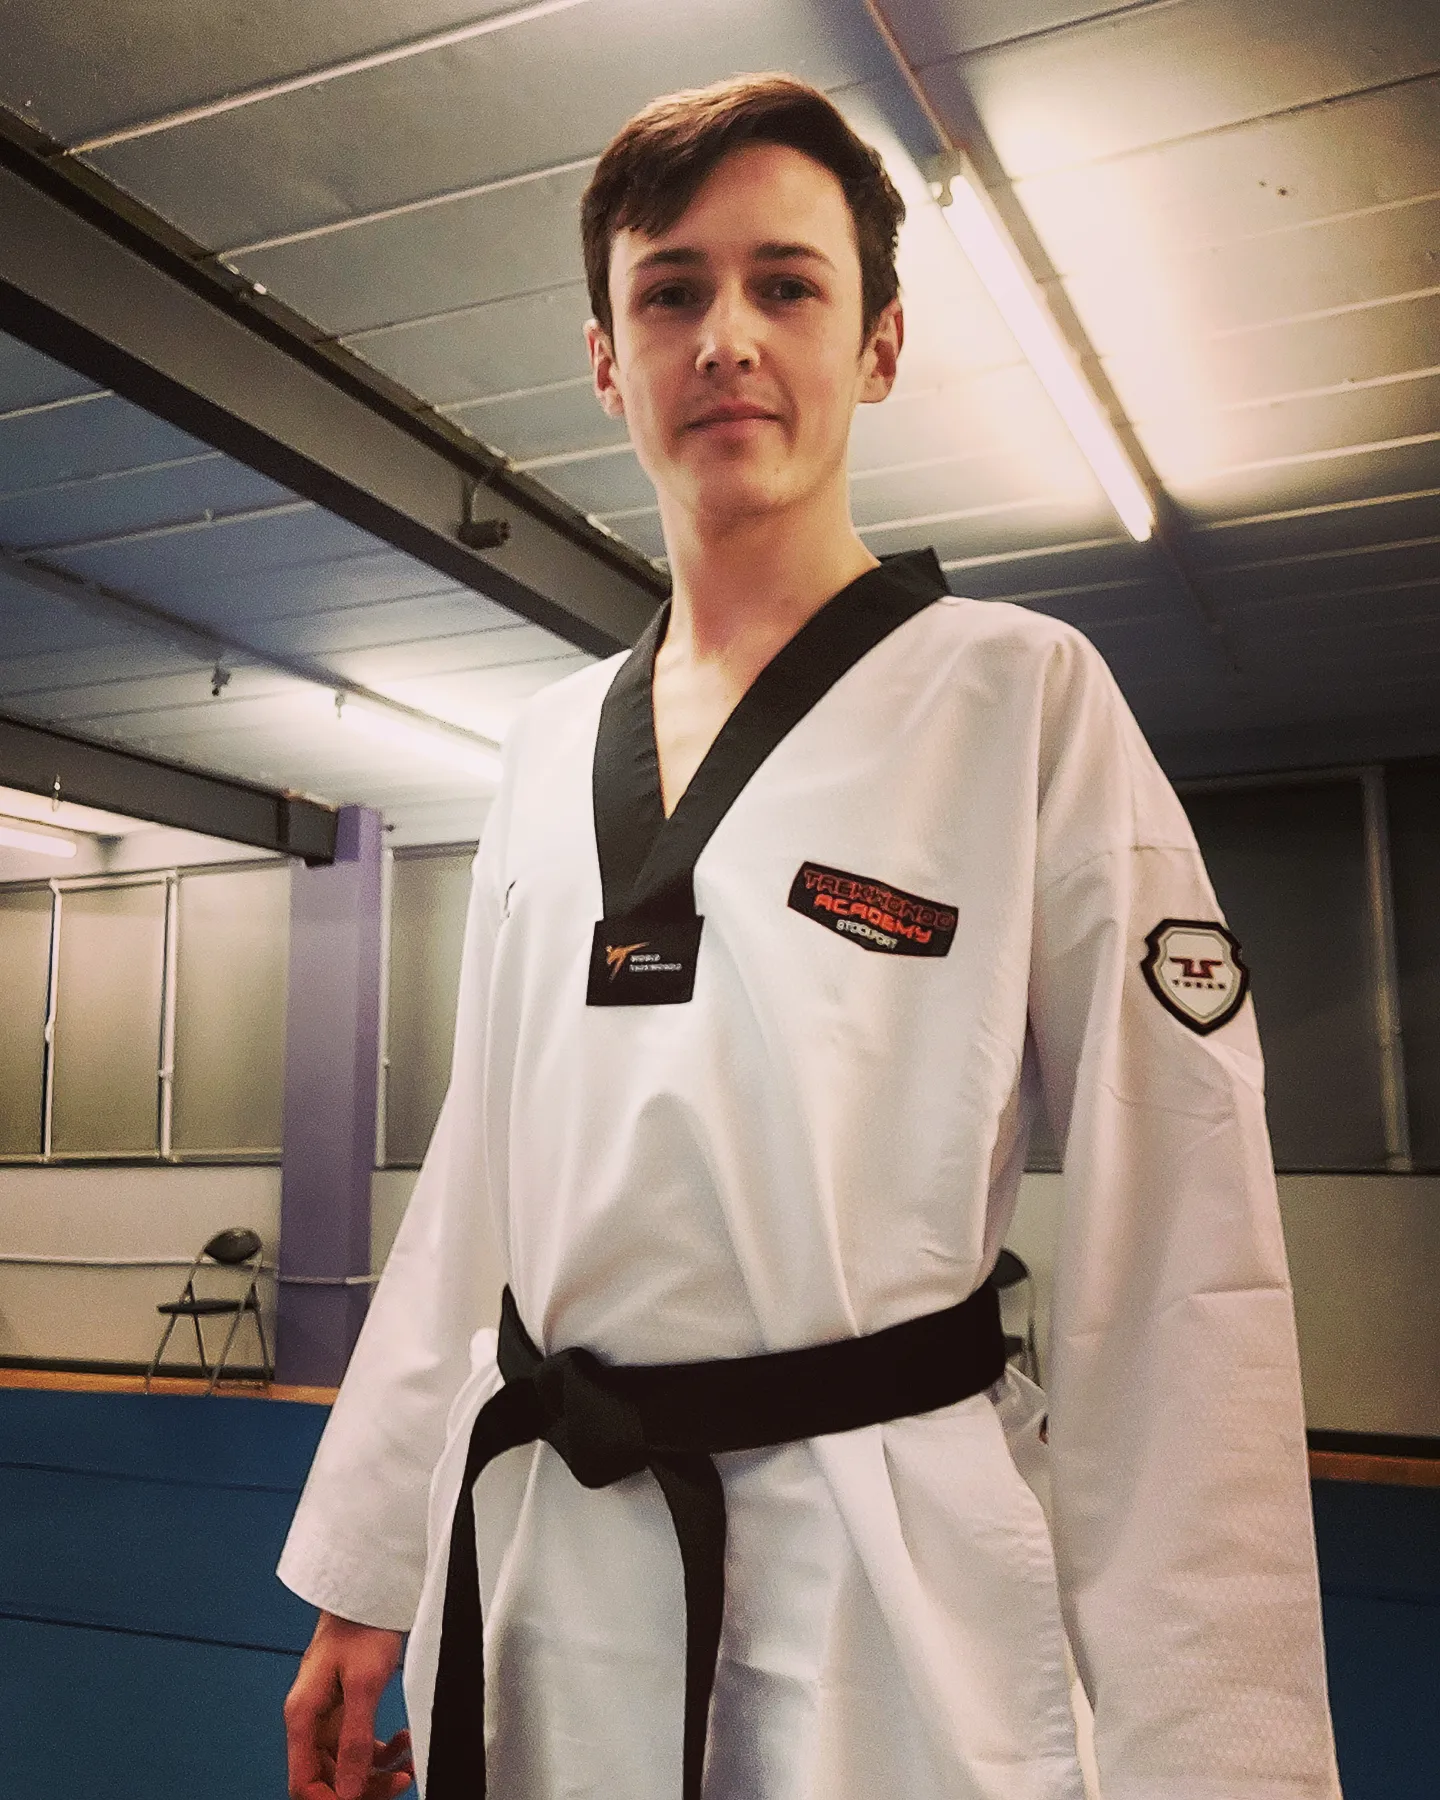 Liam Foran from Taekwondo Academy Stockport